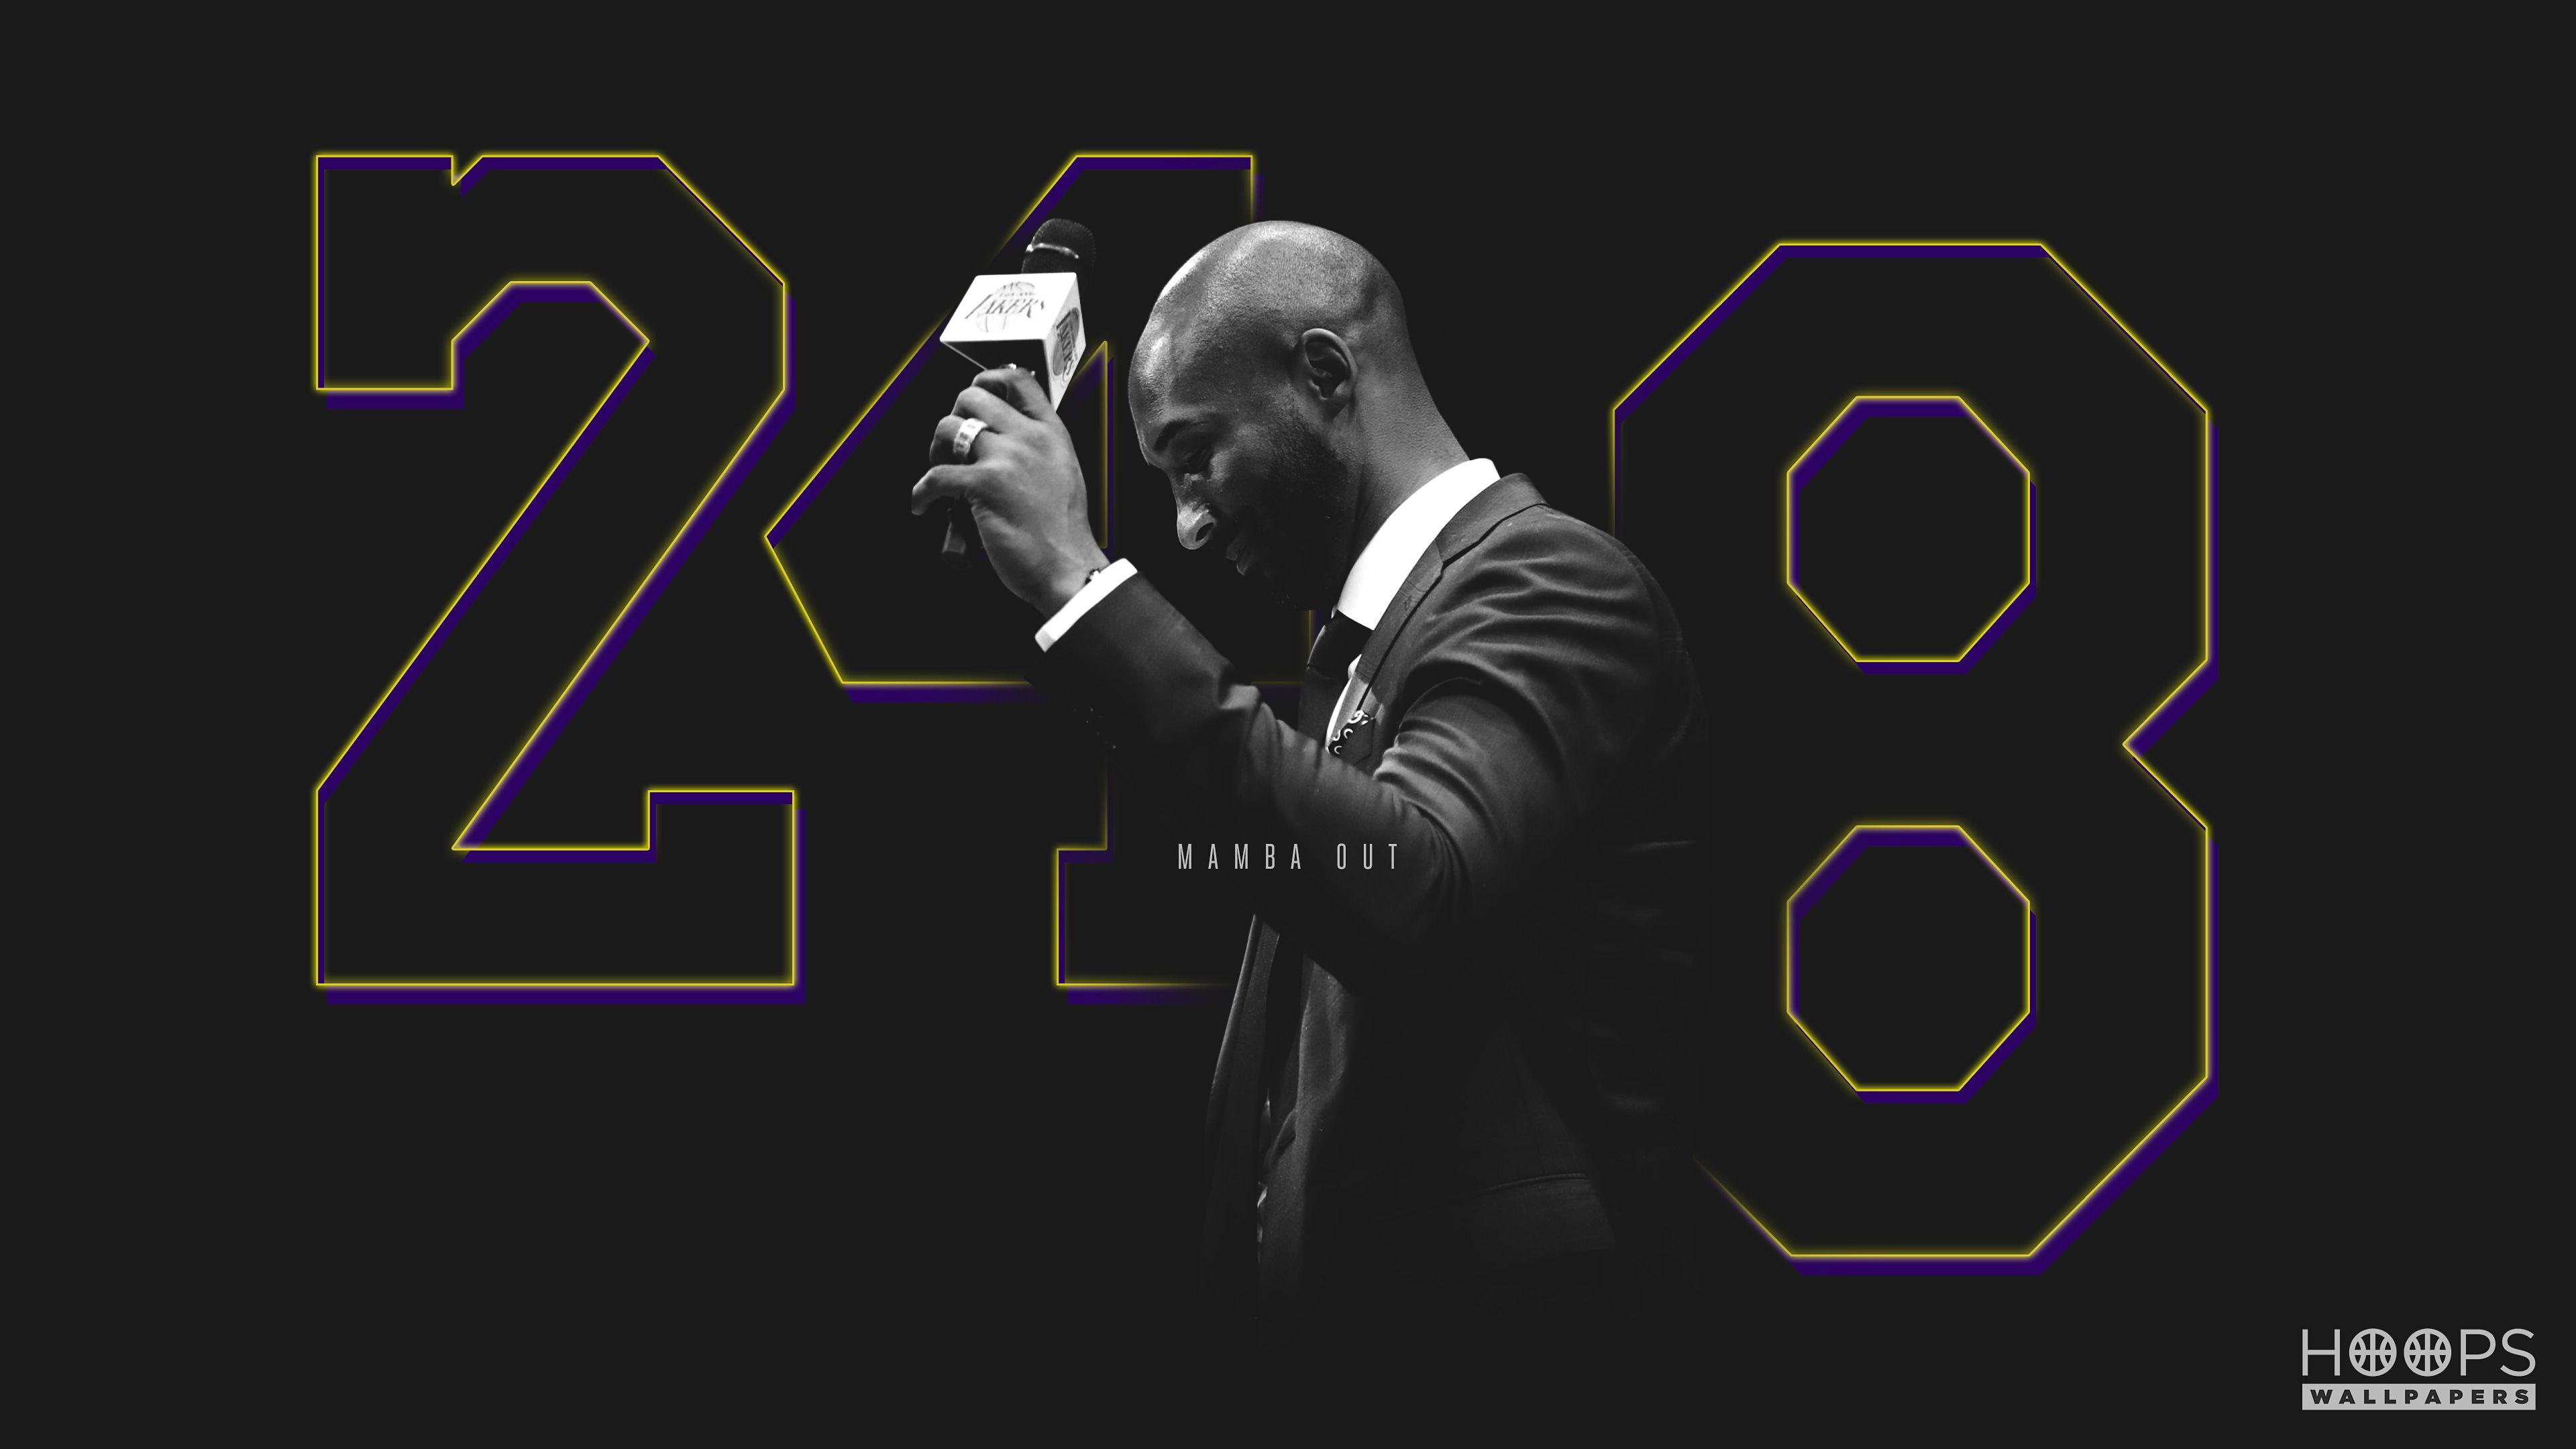 HD wallpaper Legend NBA Lakers Kobe Bryant Los Angeles Lakers Black  Mamba  Wallpaper Flare